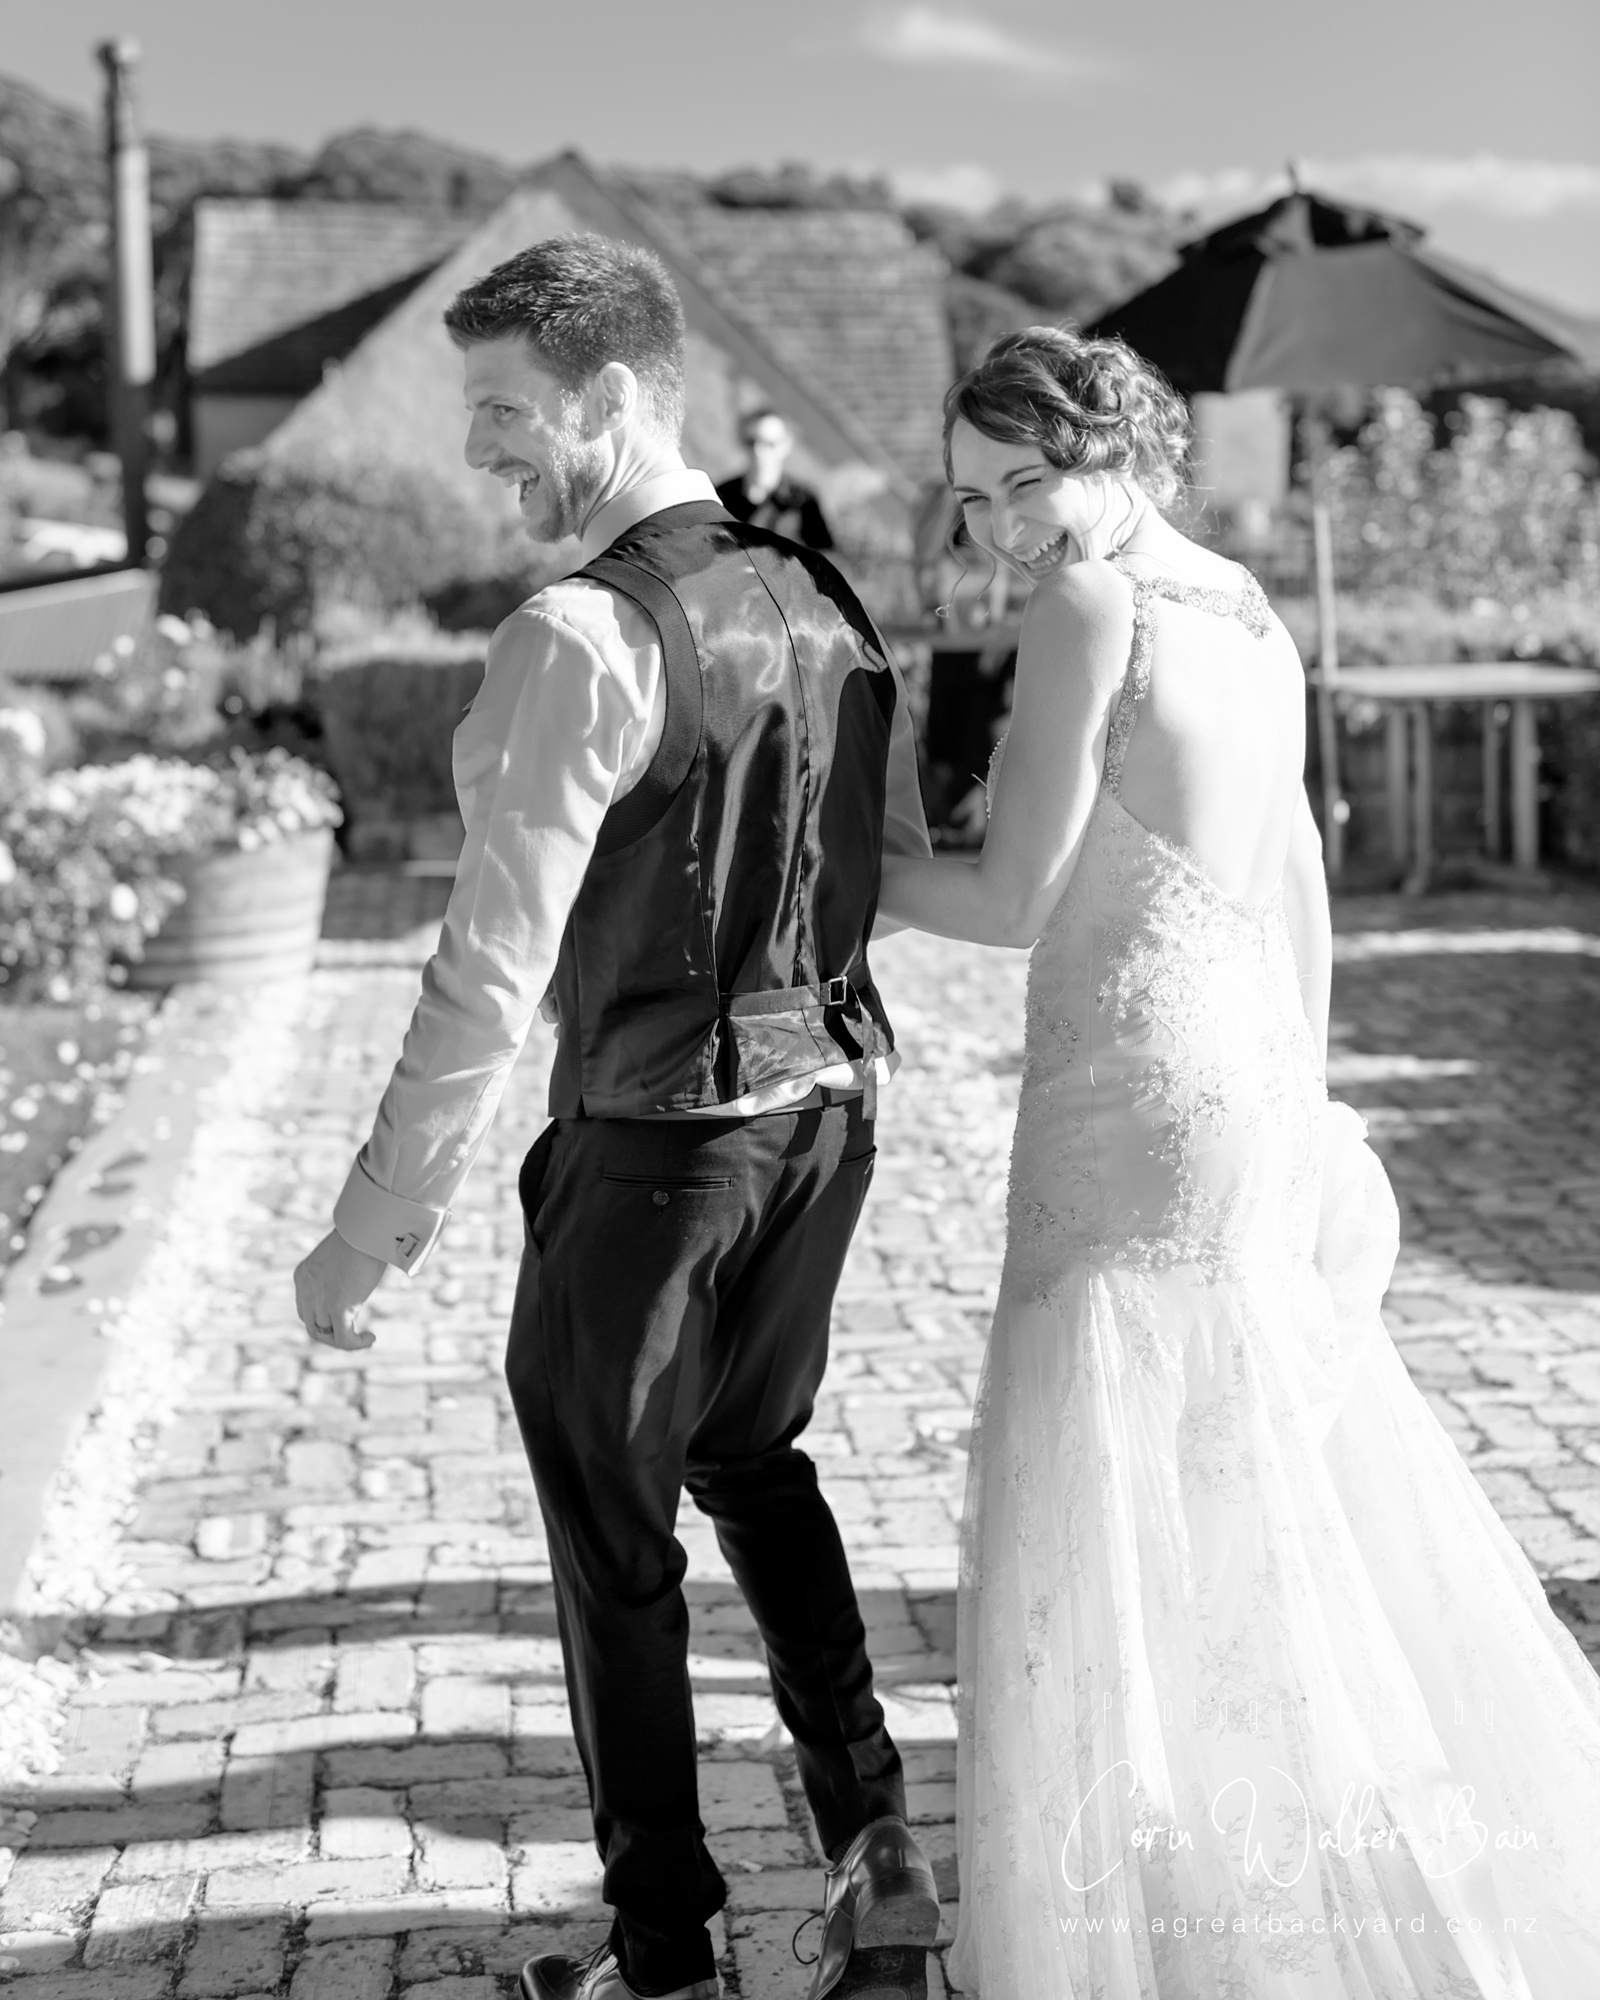 Ceremony giggles at Andy and Emma's Waiheke Island wedding by New Zealand wedding photographer Corin Walker Bain of a great backyard